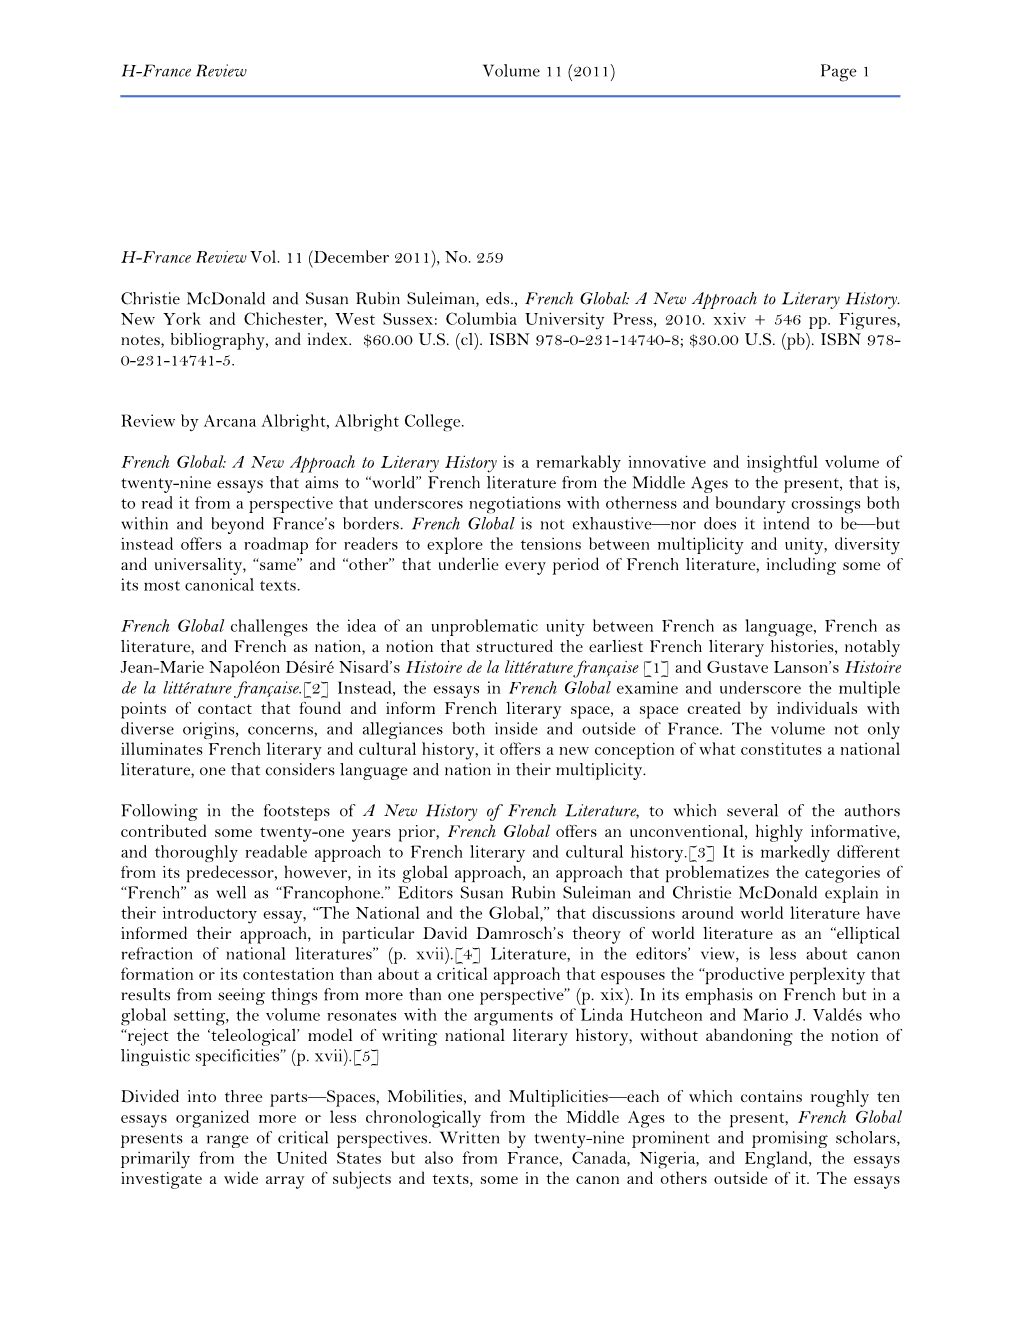 H-France Review Vol. 11 (December 2011), No. 259 Christie Mcdonald